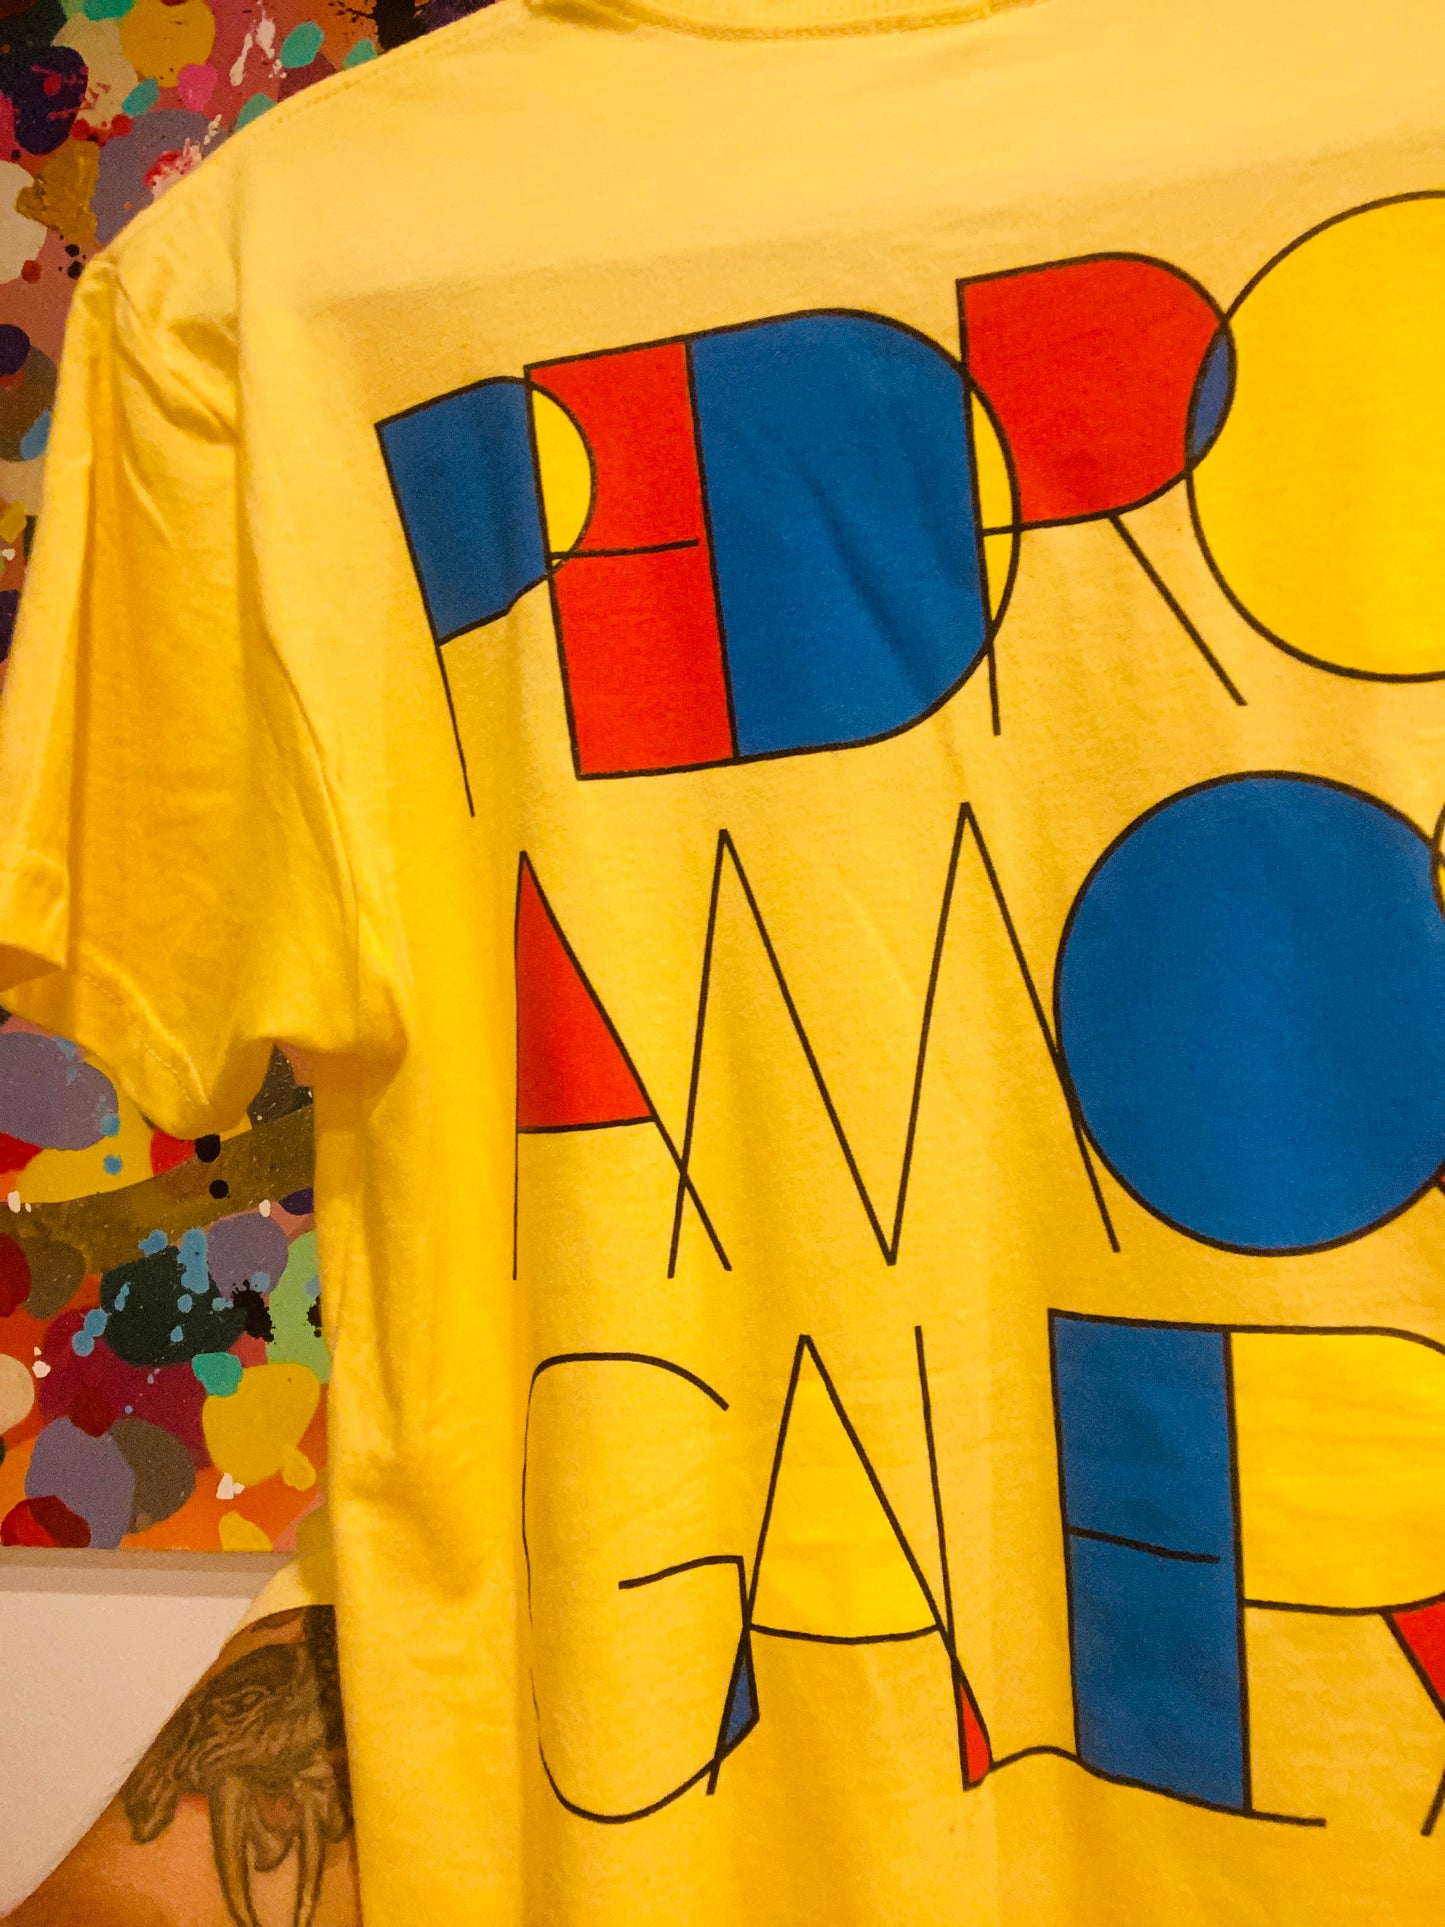 "Pedro AMOS Galeria" - Yellow Contemporary Logo - T-Shirt